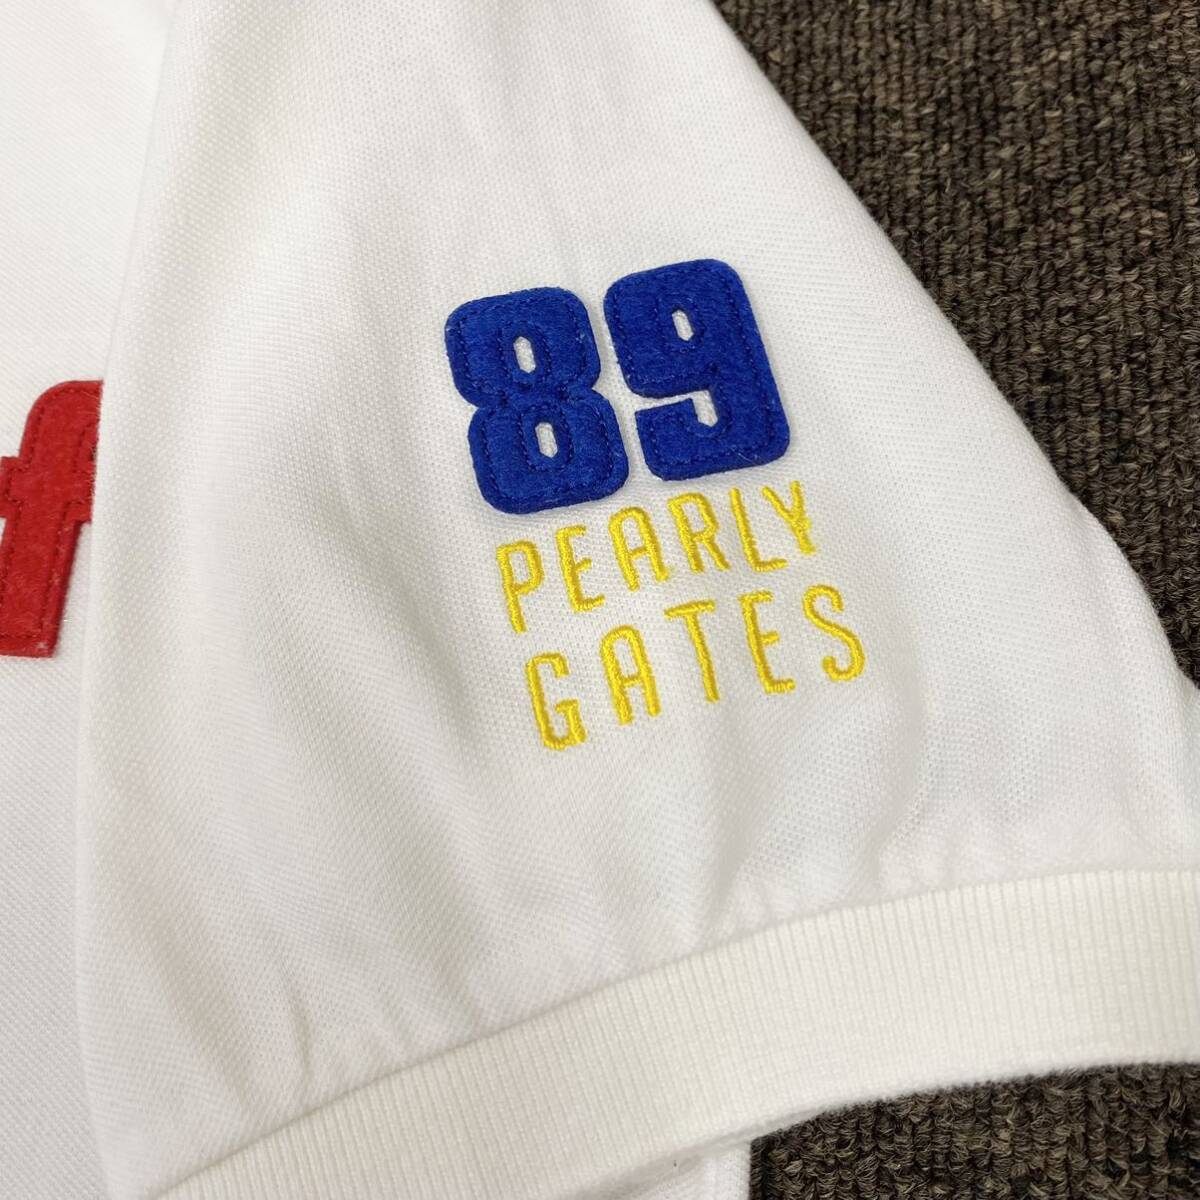 PEARLY GATES(パーリーゲイツ)半袖ポロシャツ アップリケロゴ 鹿の子 メンズ7 ホワイトの画像6